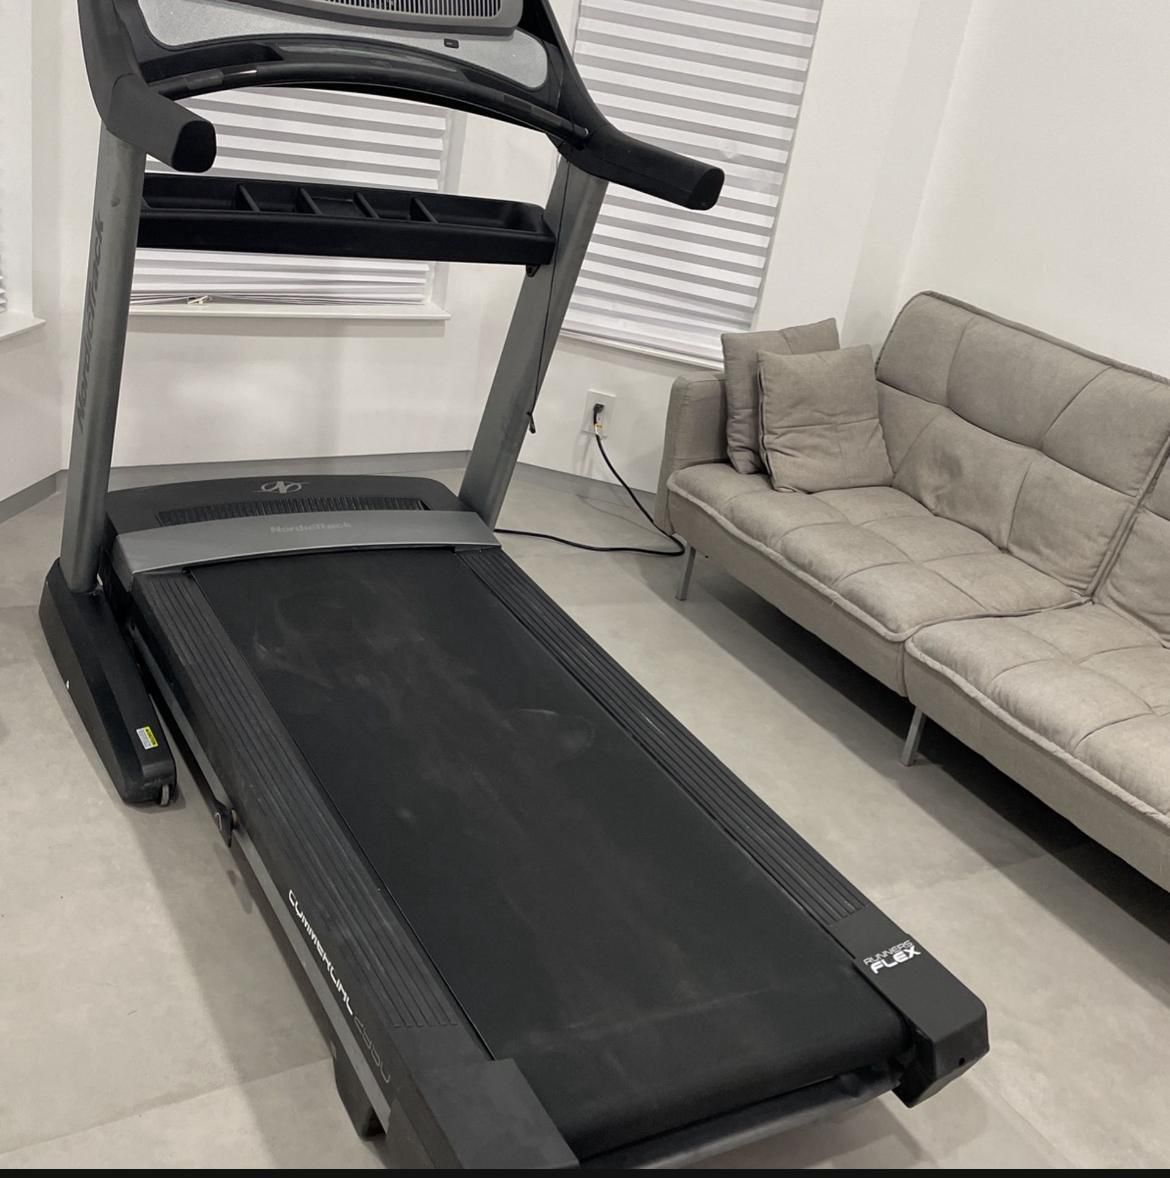 NordicTrack Commercial 2950 Treadmills Plus Balanced Body Pilates Allegro